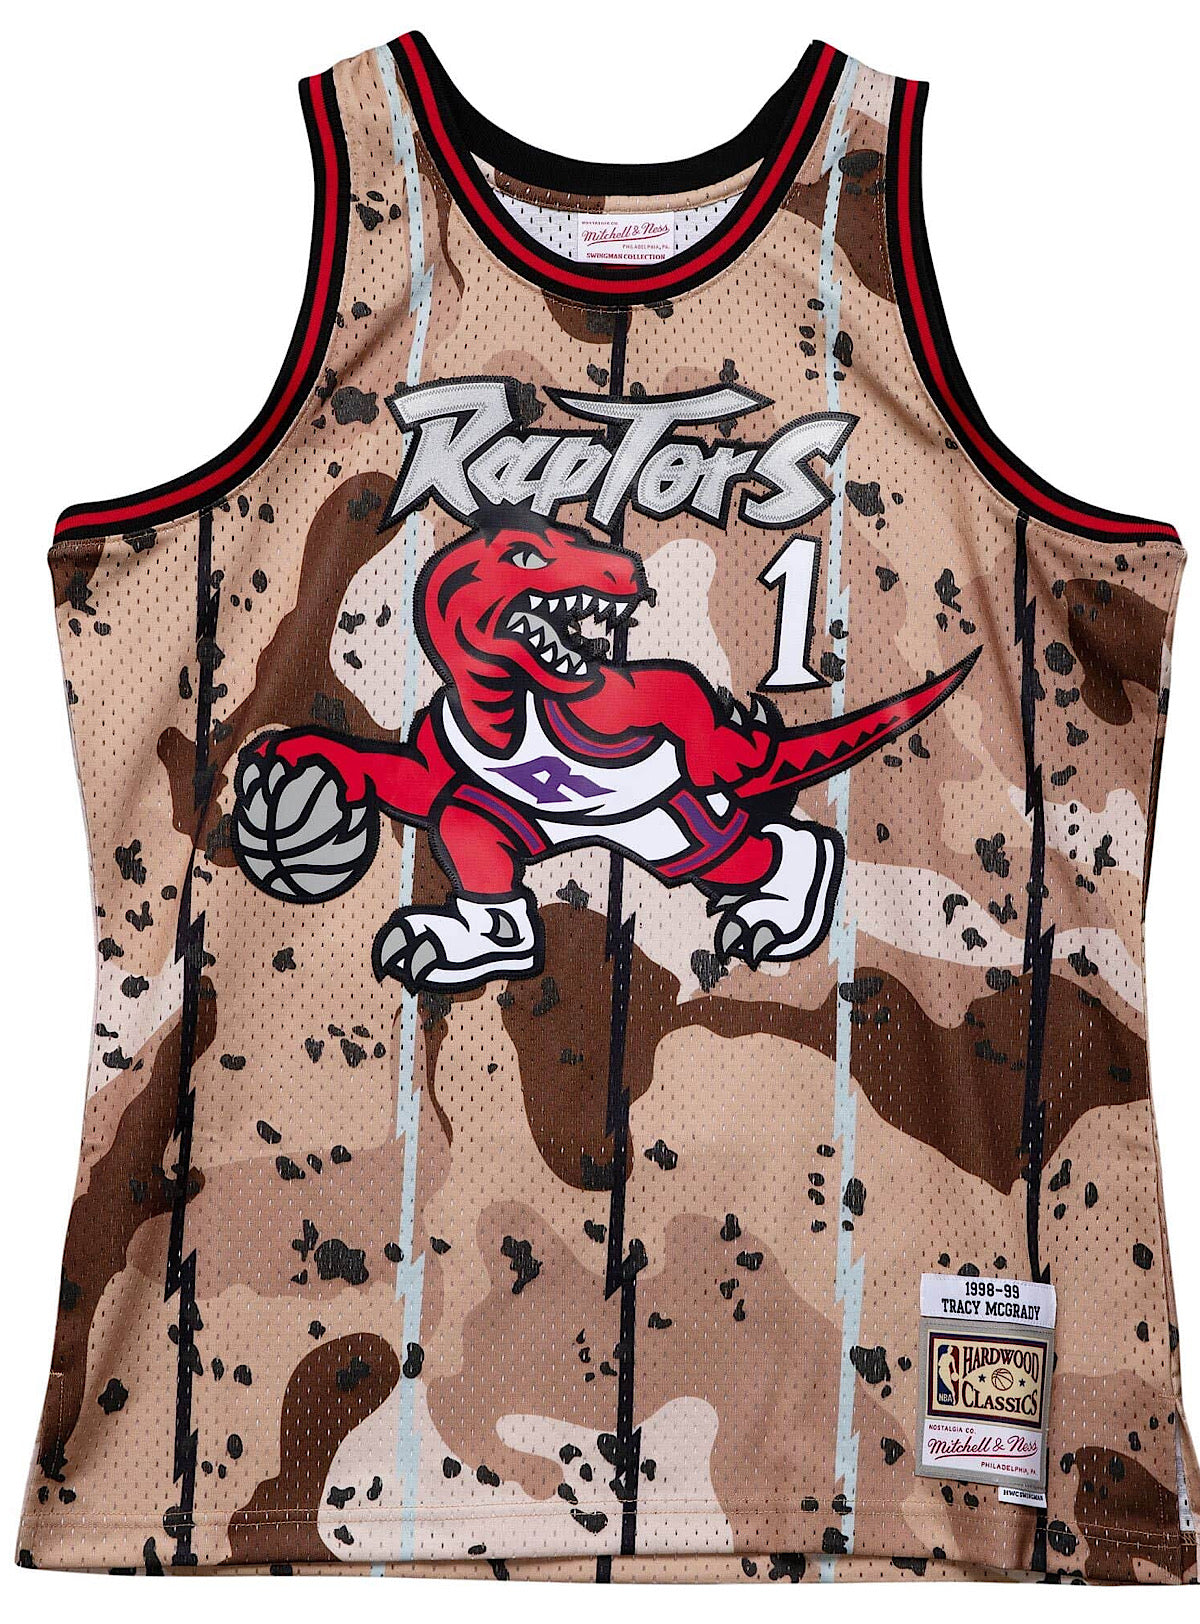 Raptors unveil alternate camouflage jersey